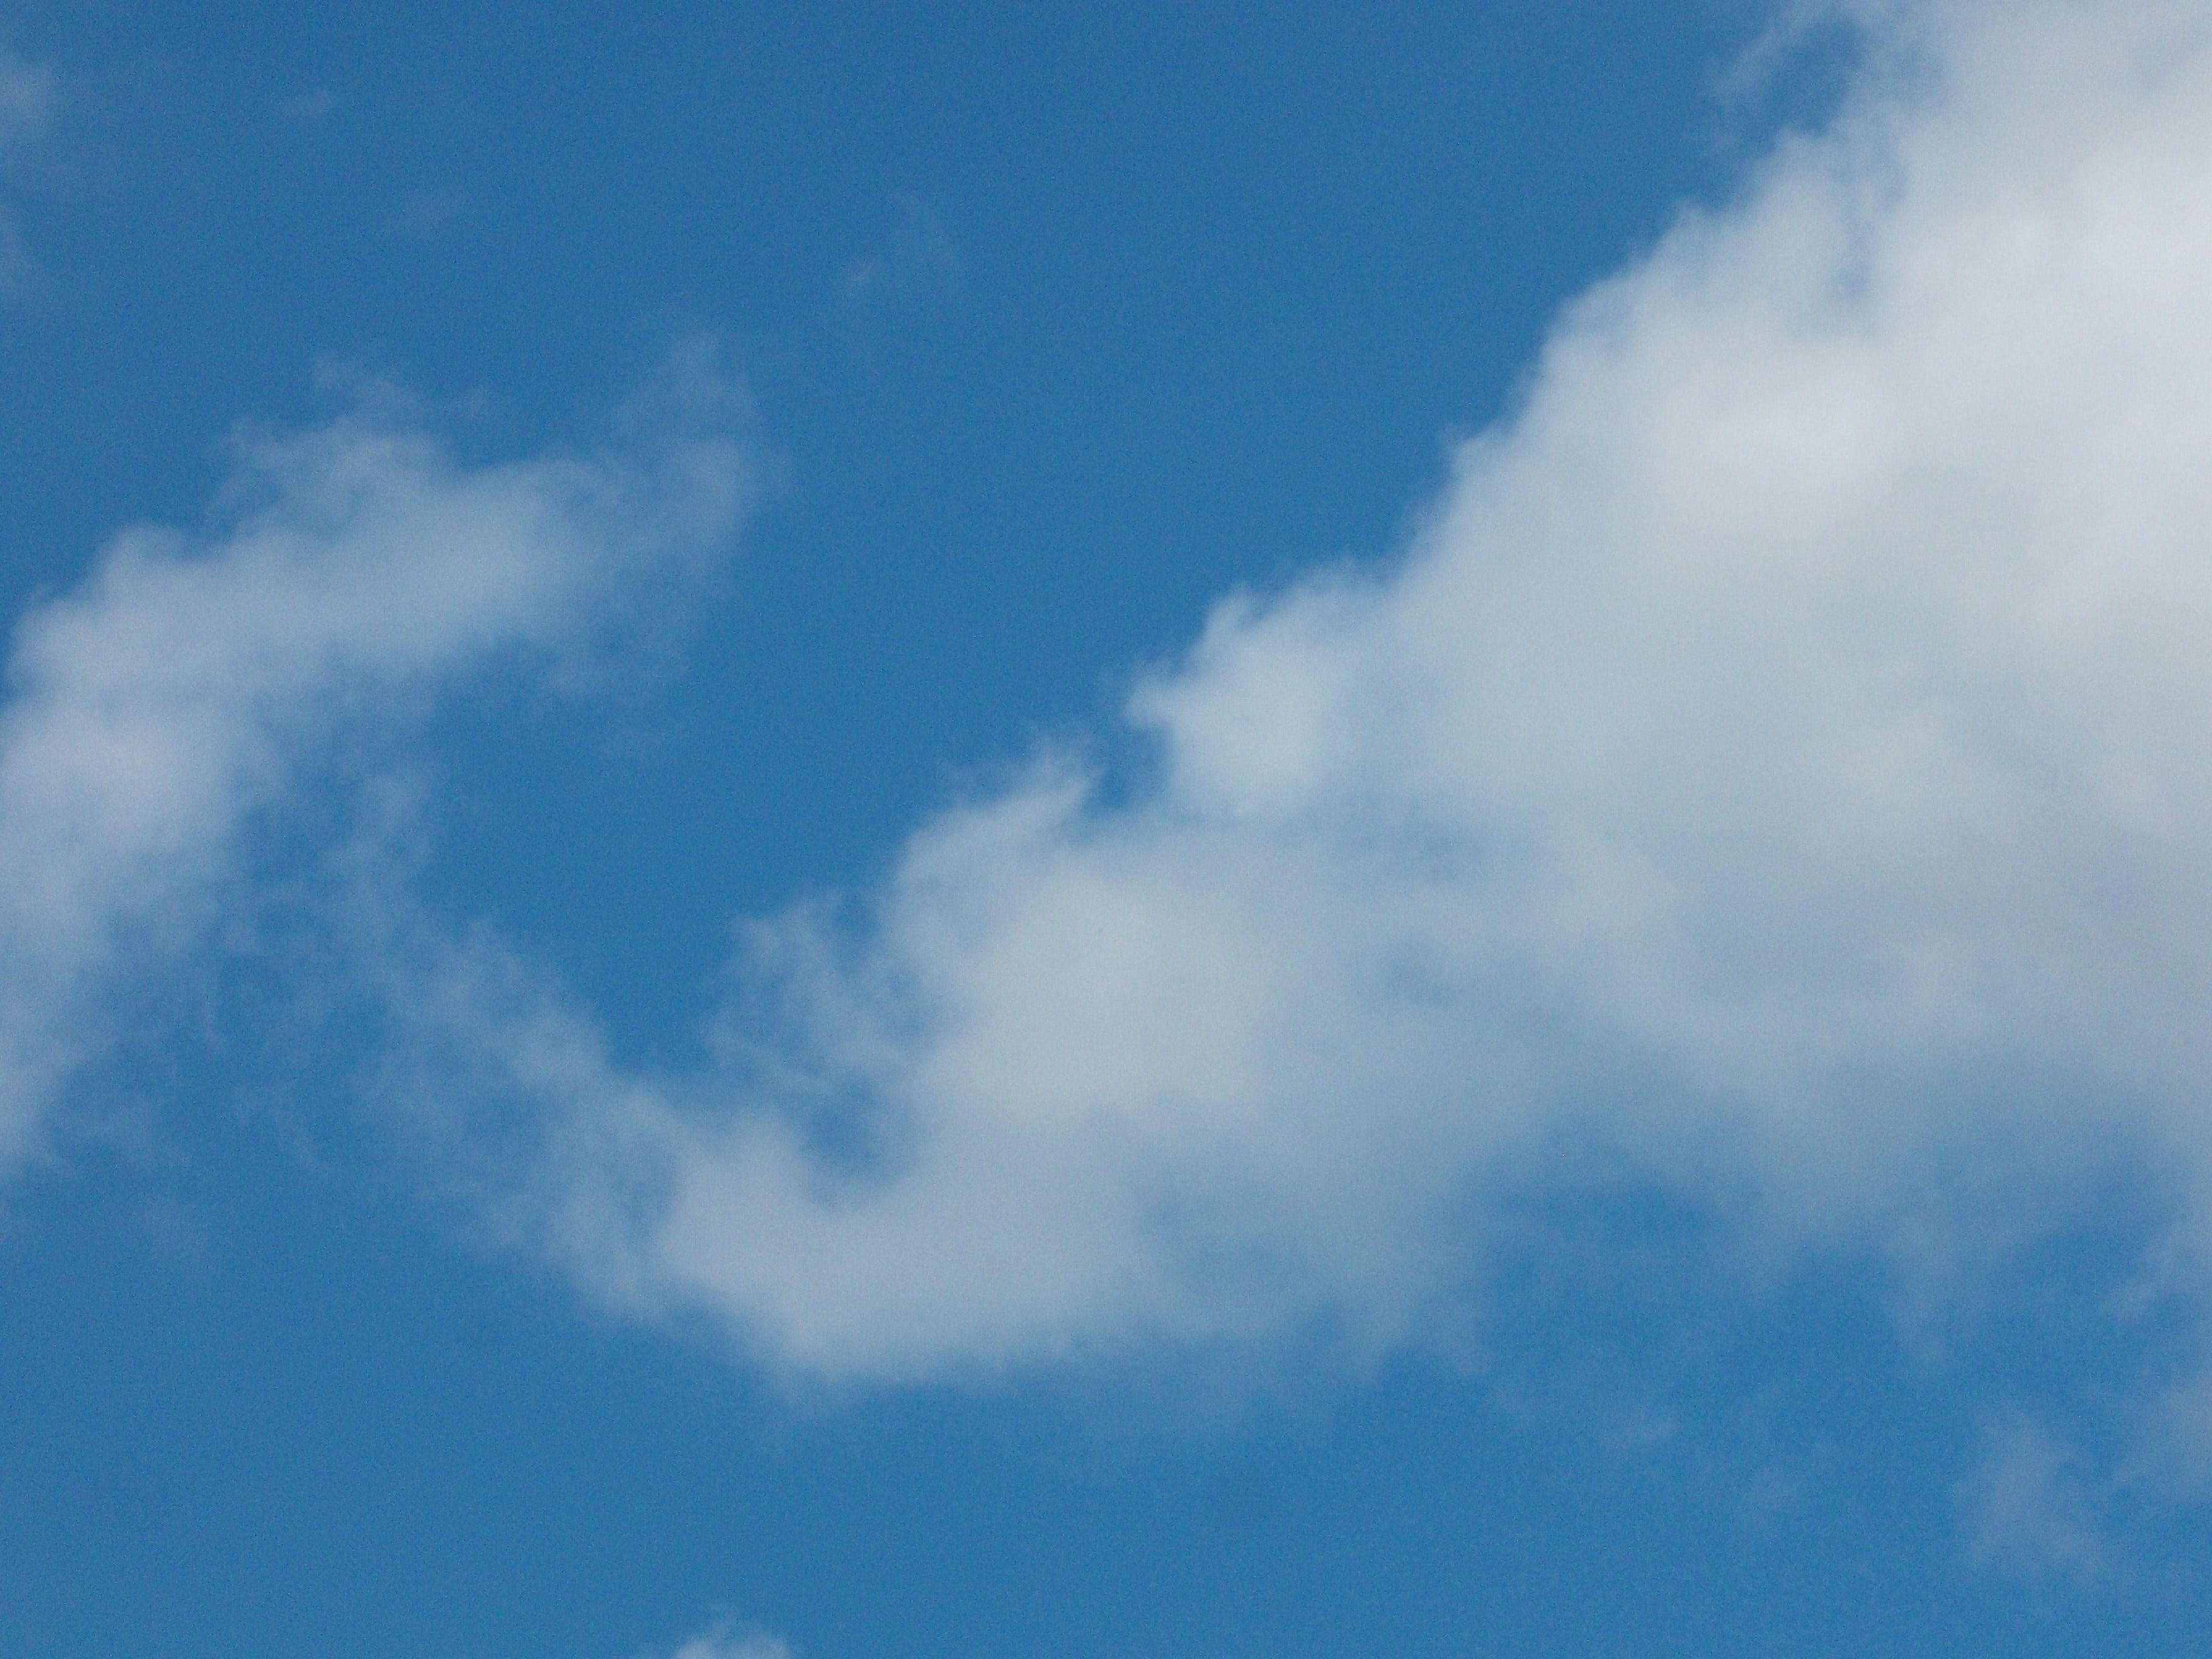 Aesthetic Cloud Wallpapers - Top Free Aesthetic Cloud ...